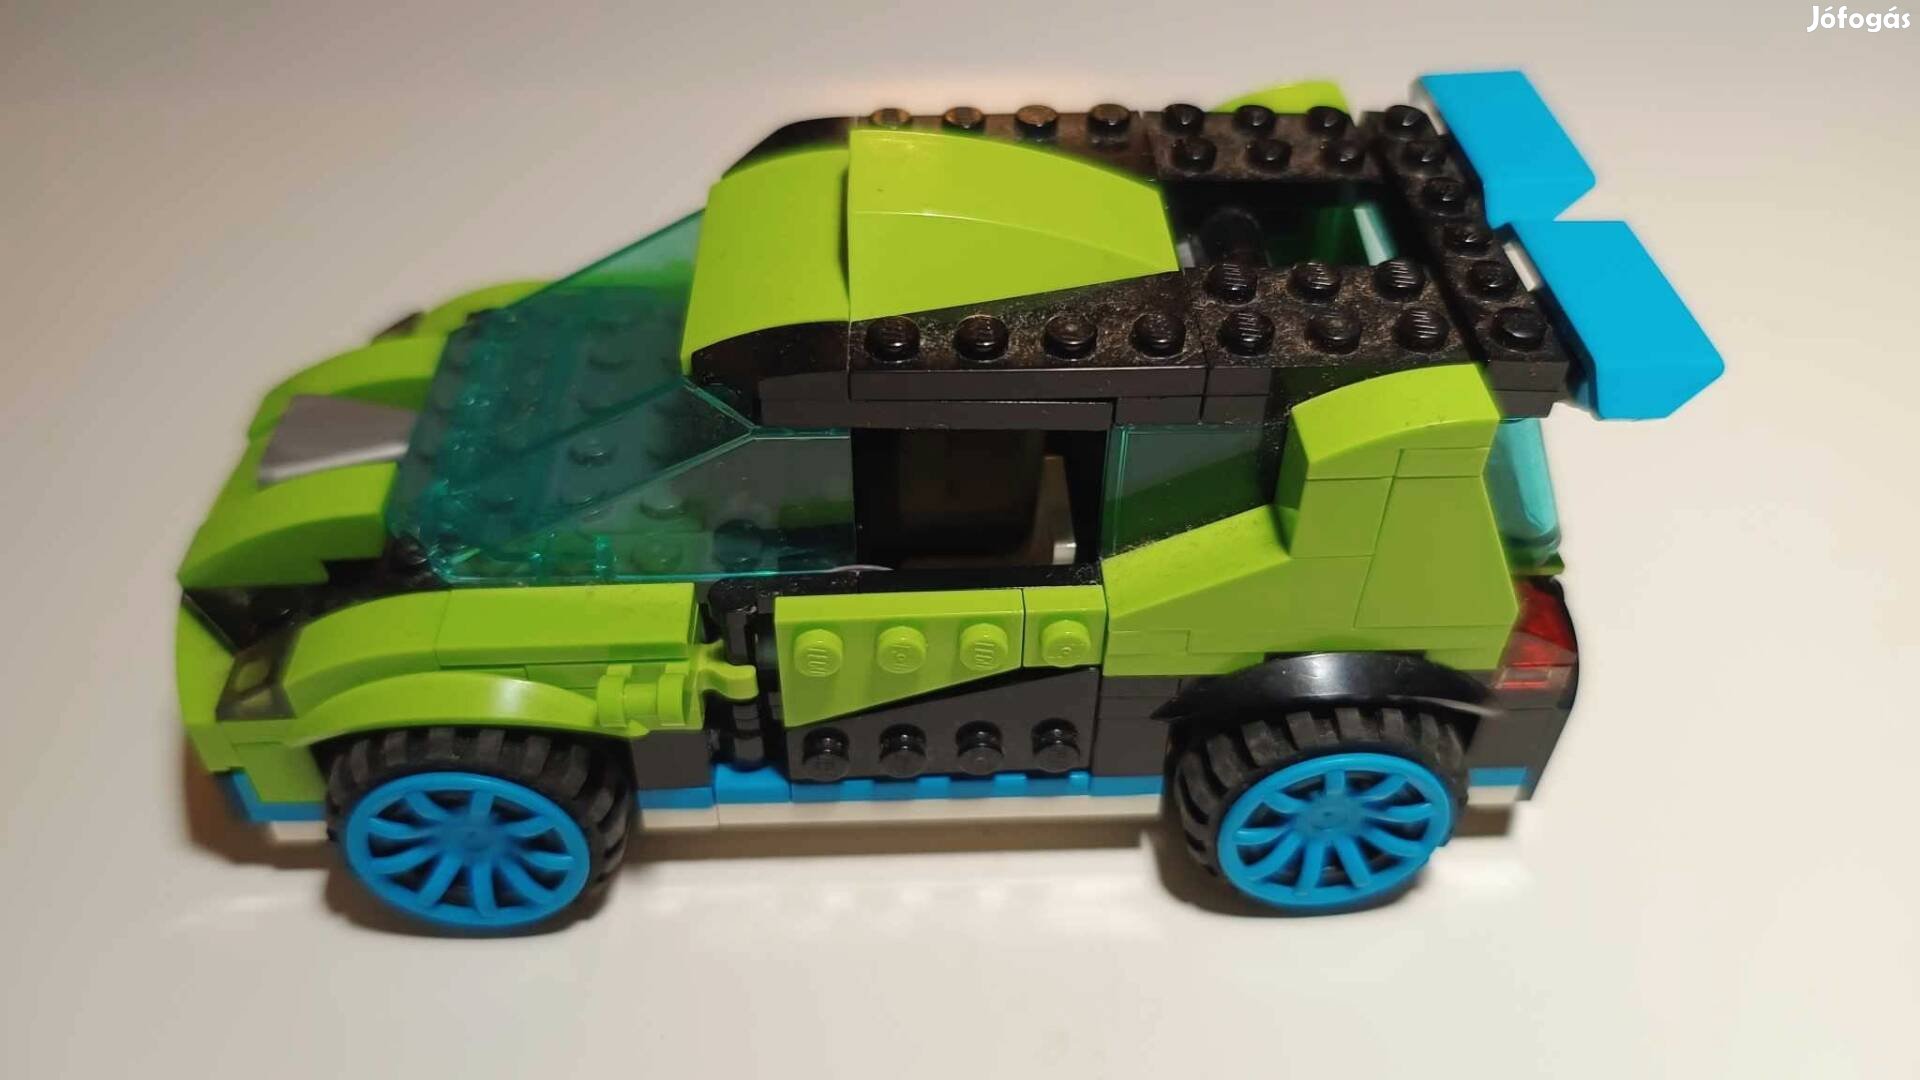 Lego Creator 31074